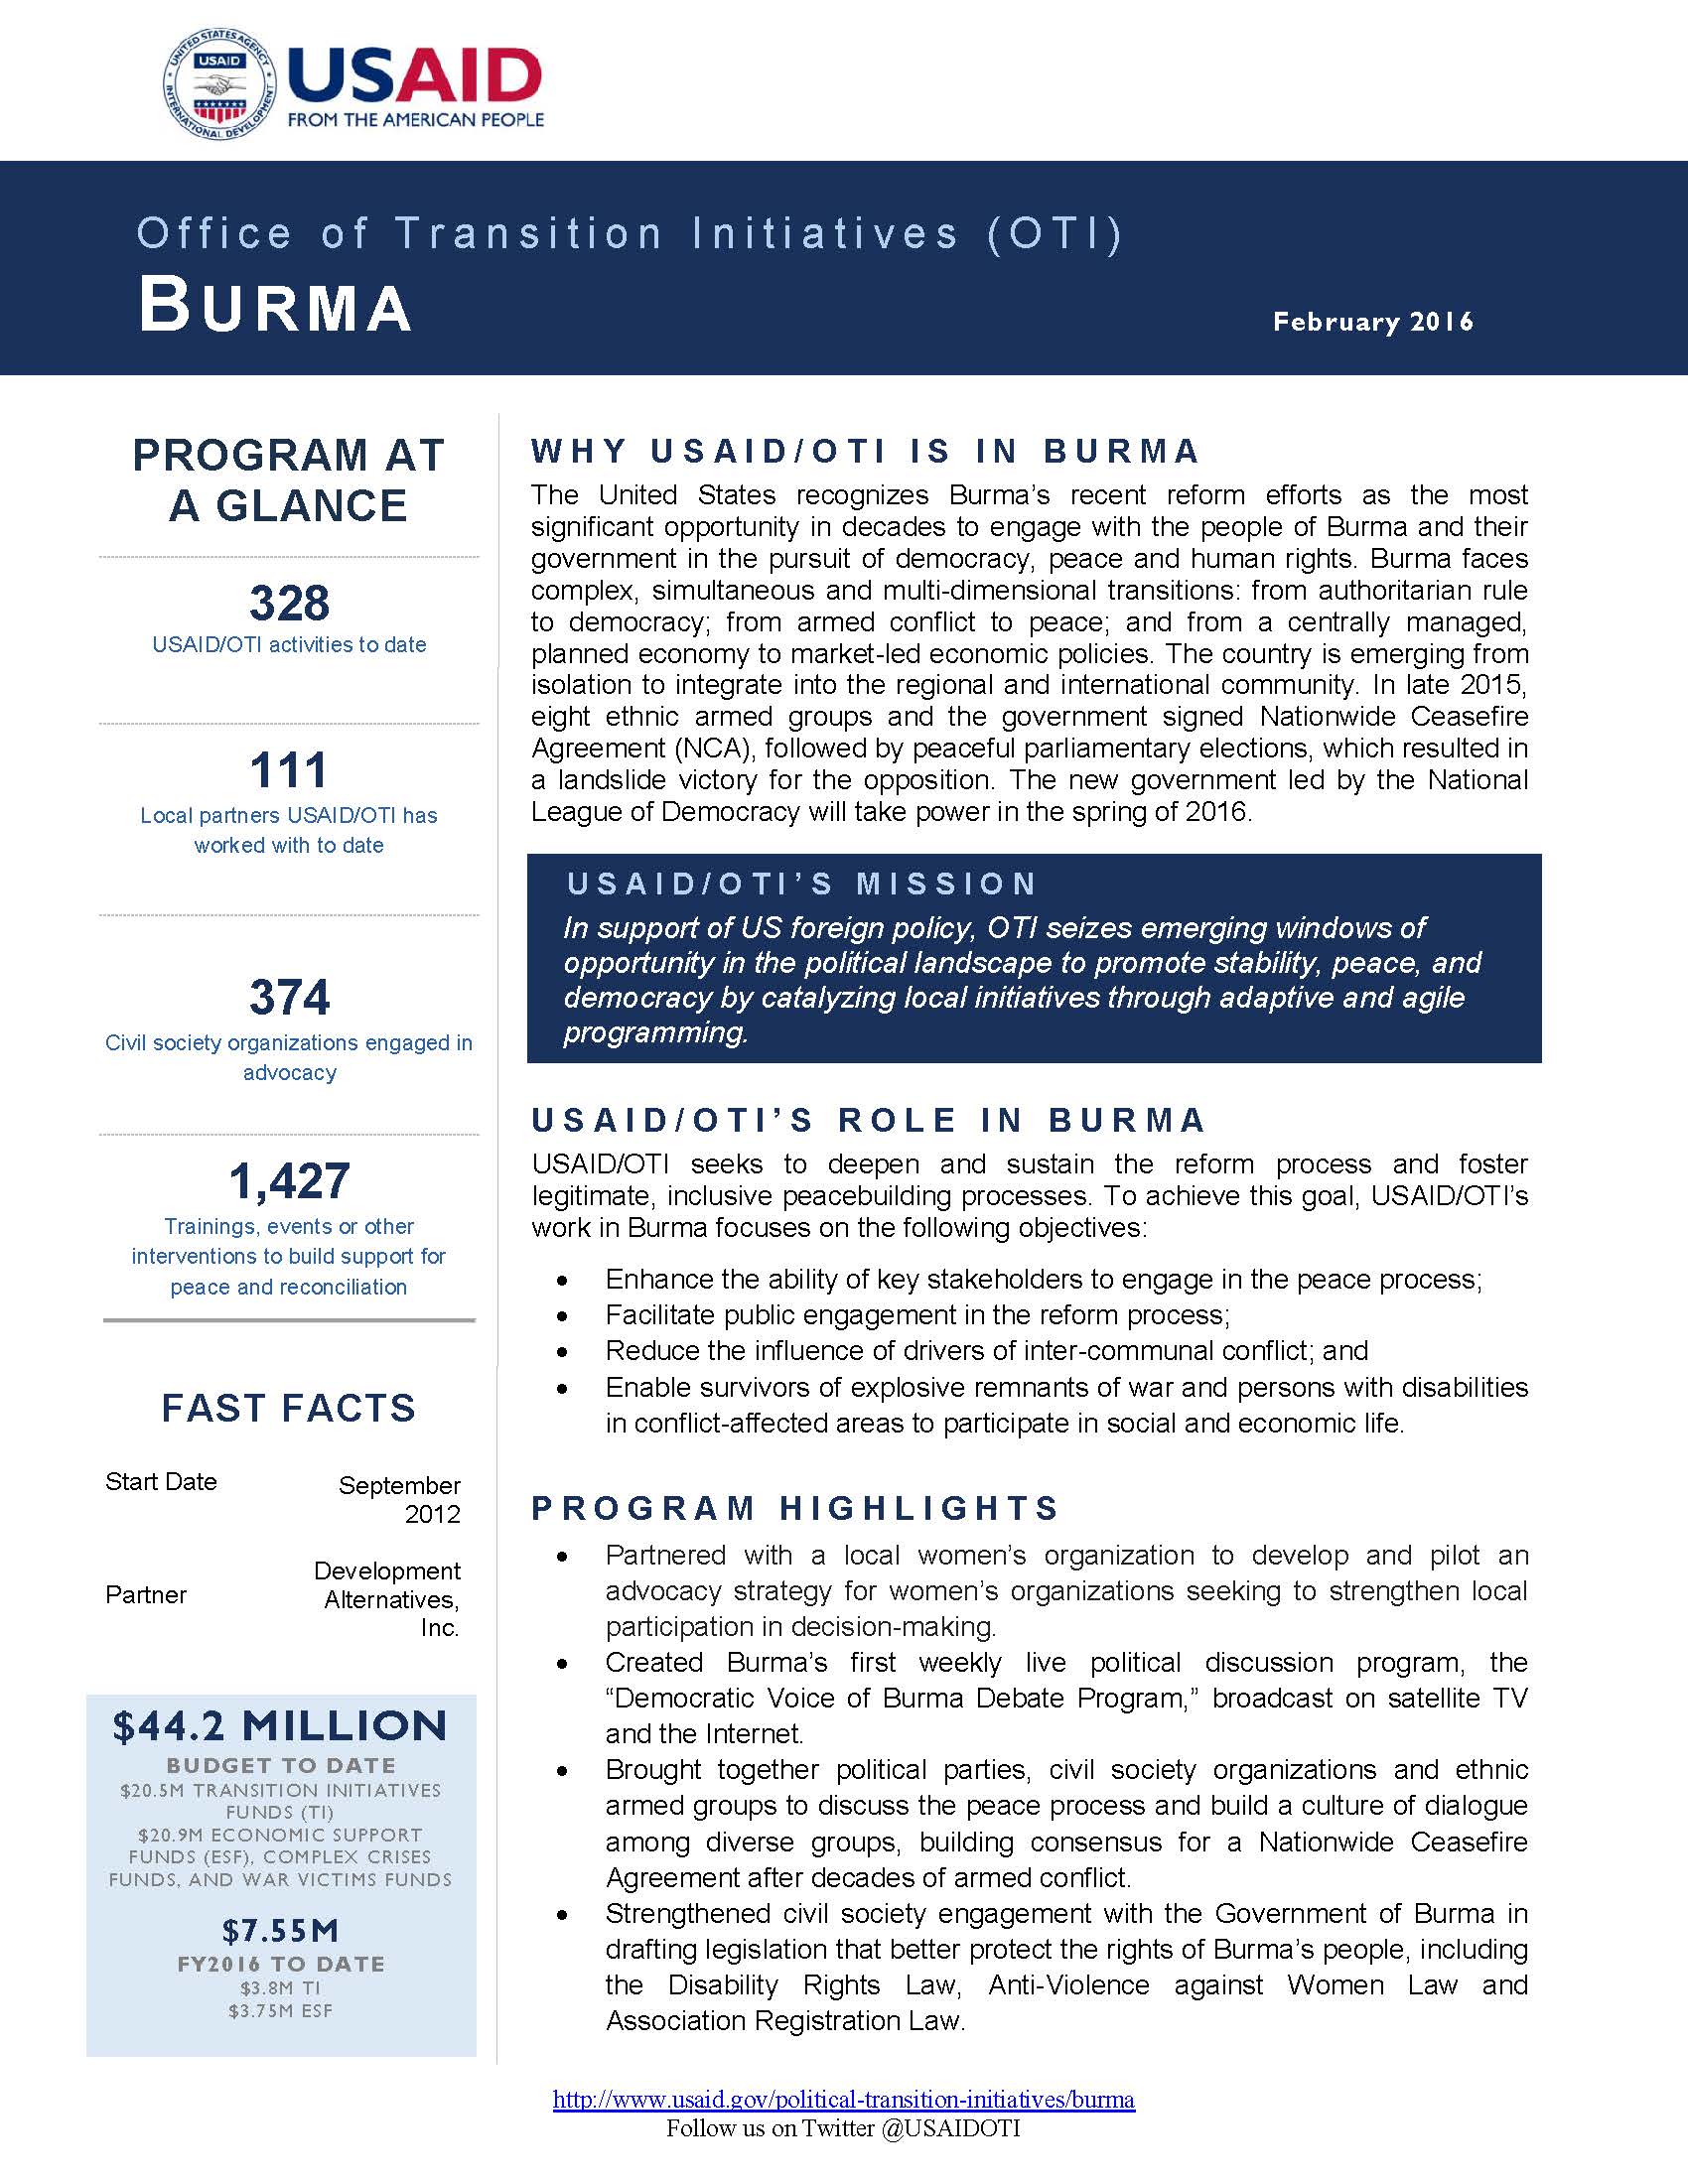 Burma Transition Initiatives 2016 Fact Sheet